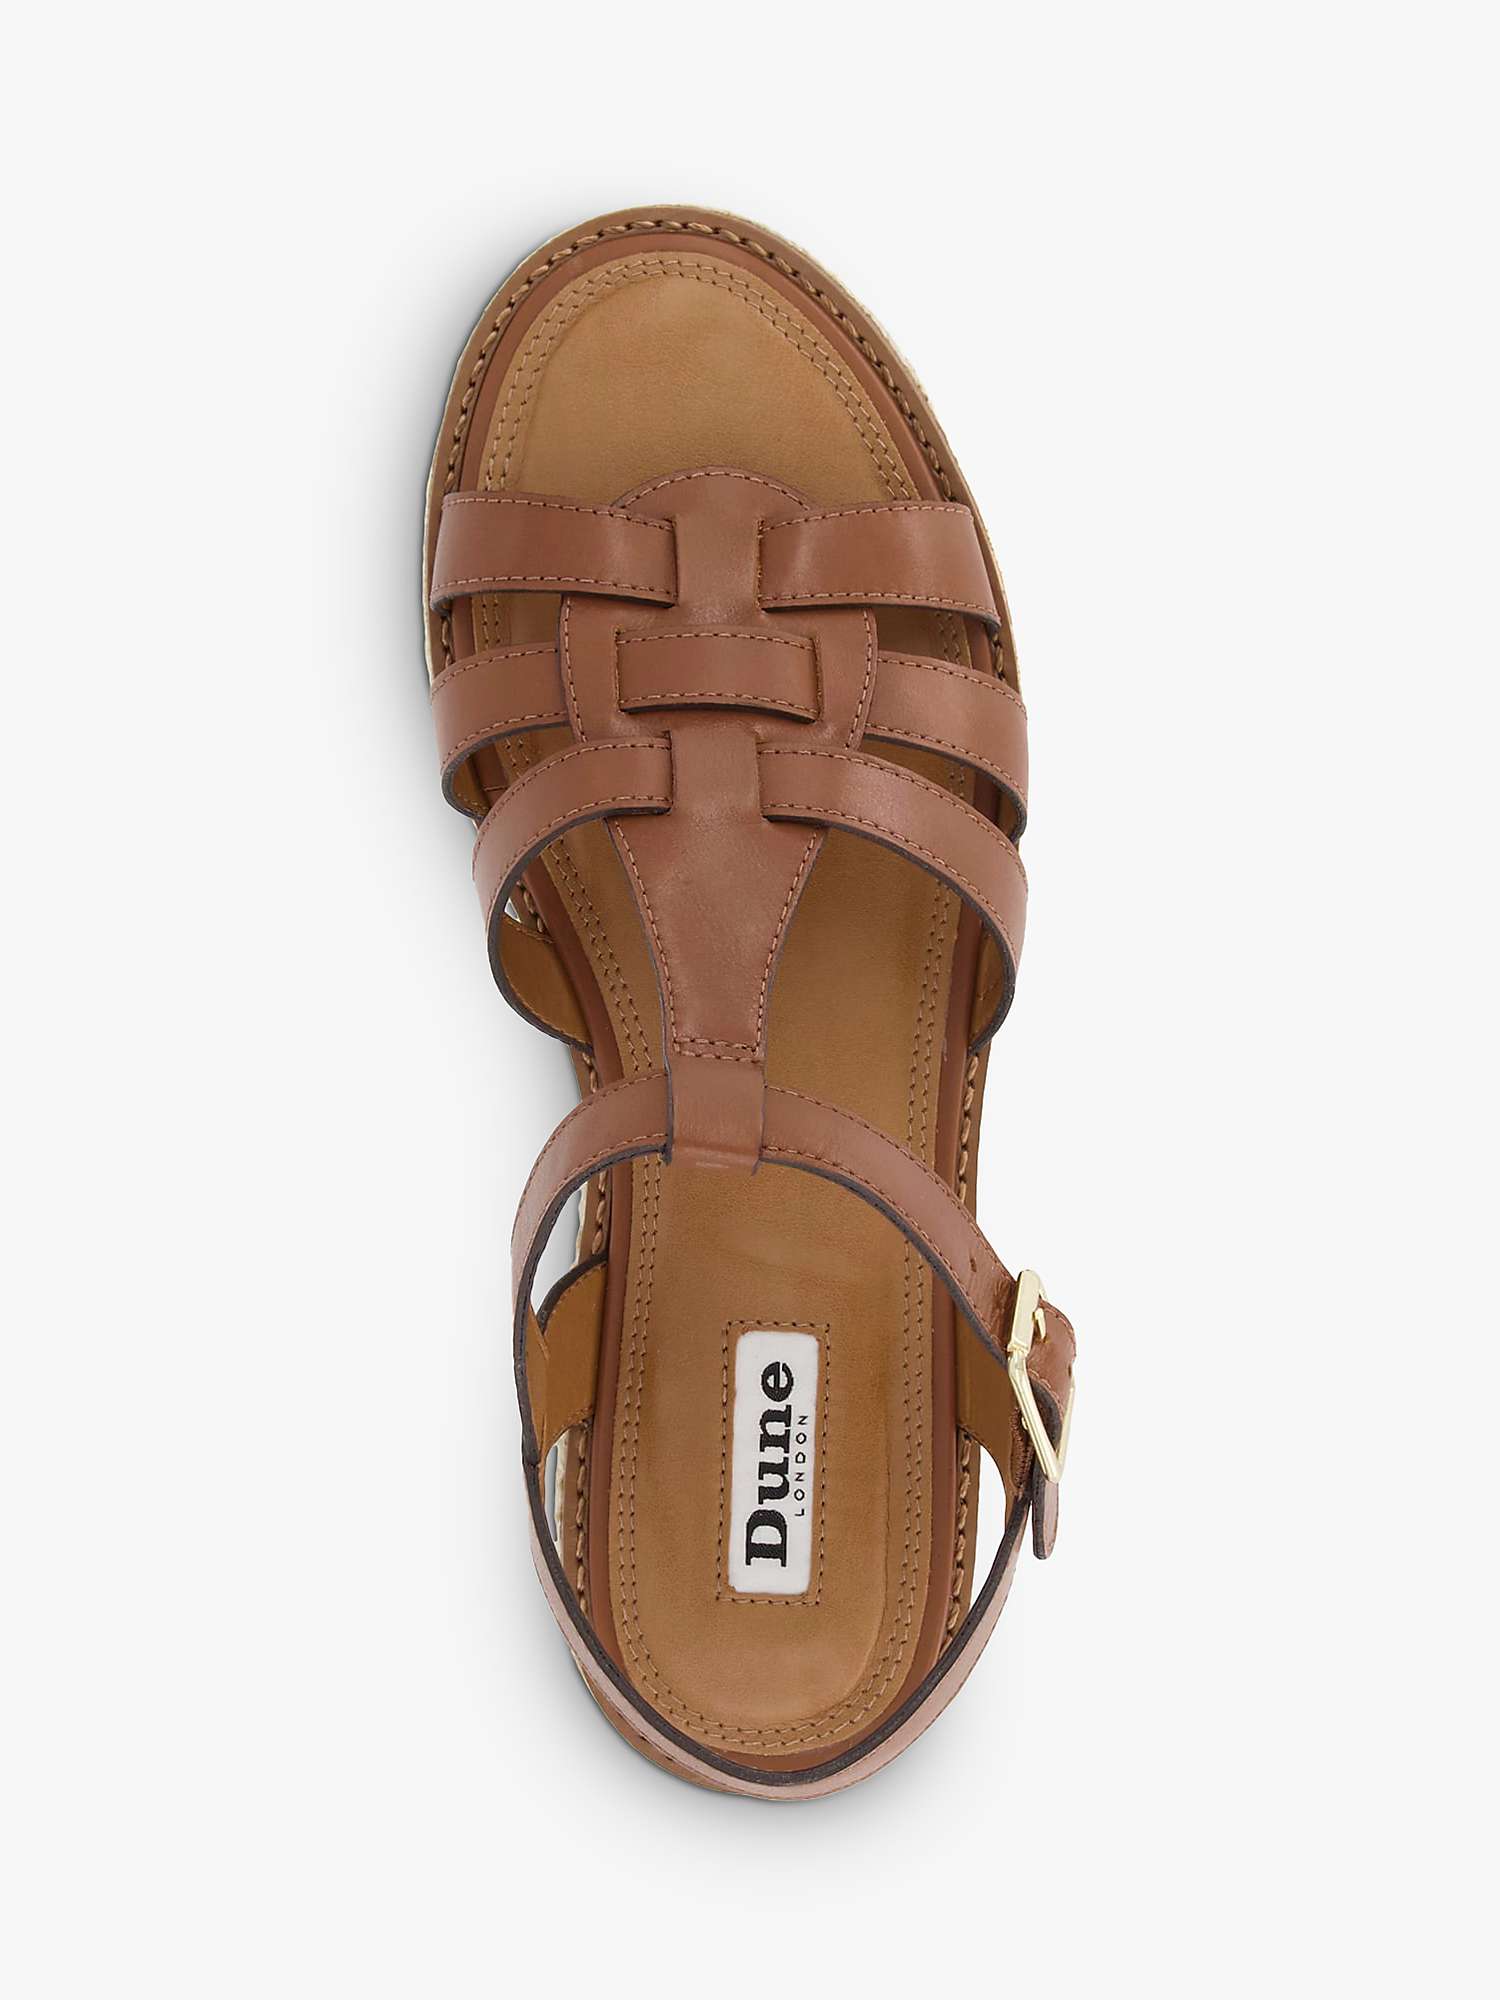 Buy Dune Latch Leather Flatform Espadrille Sandals Online at johnlewis.com